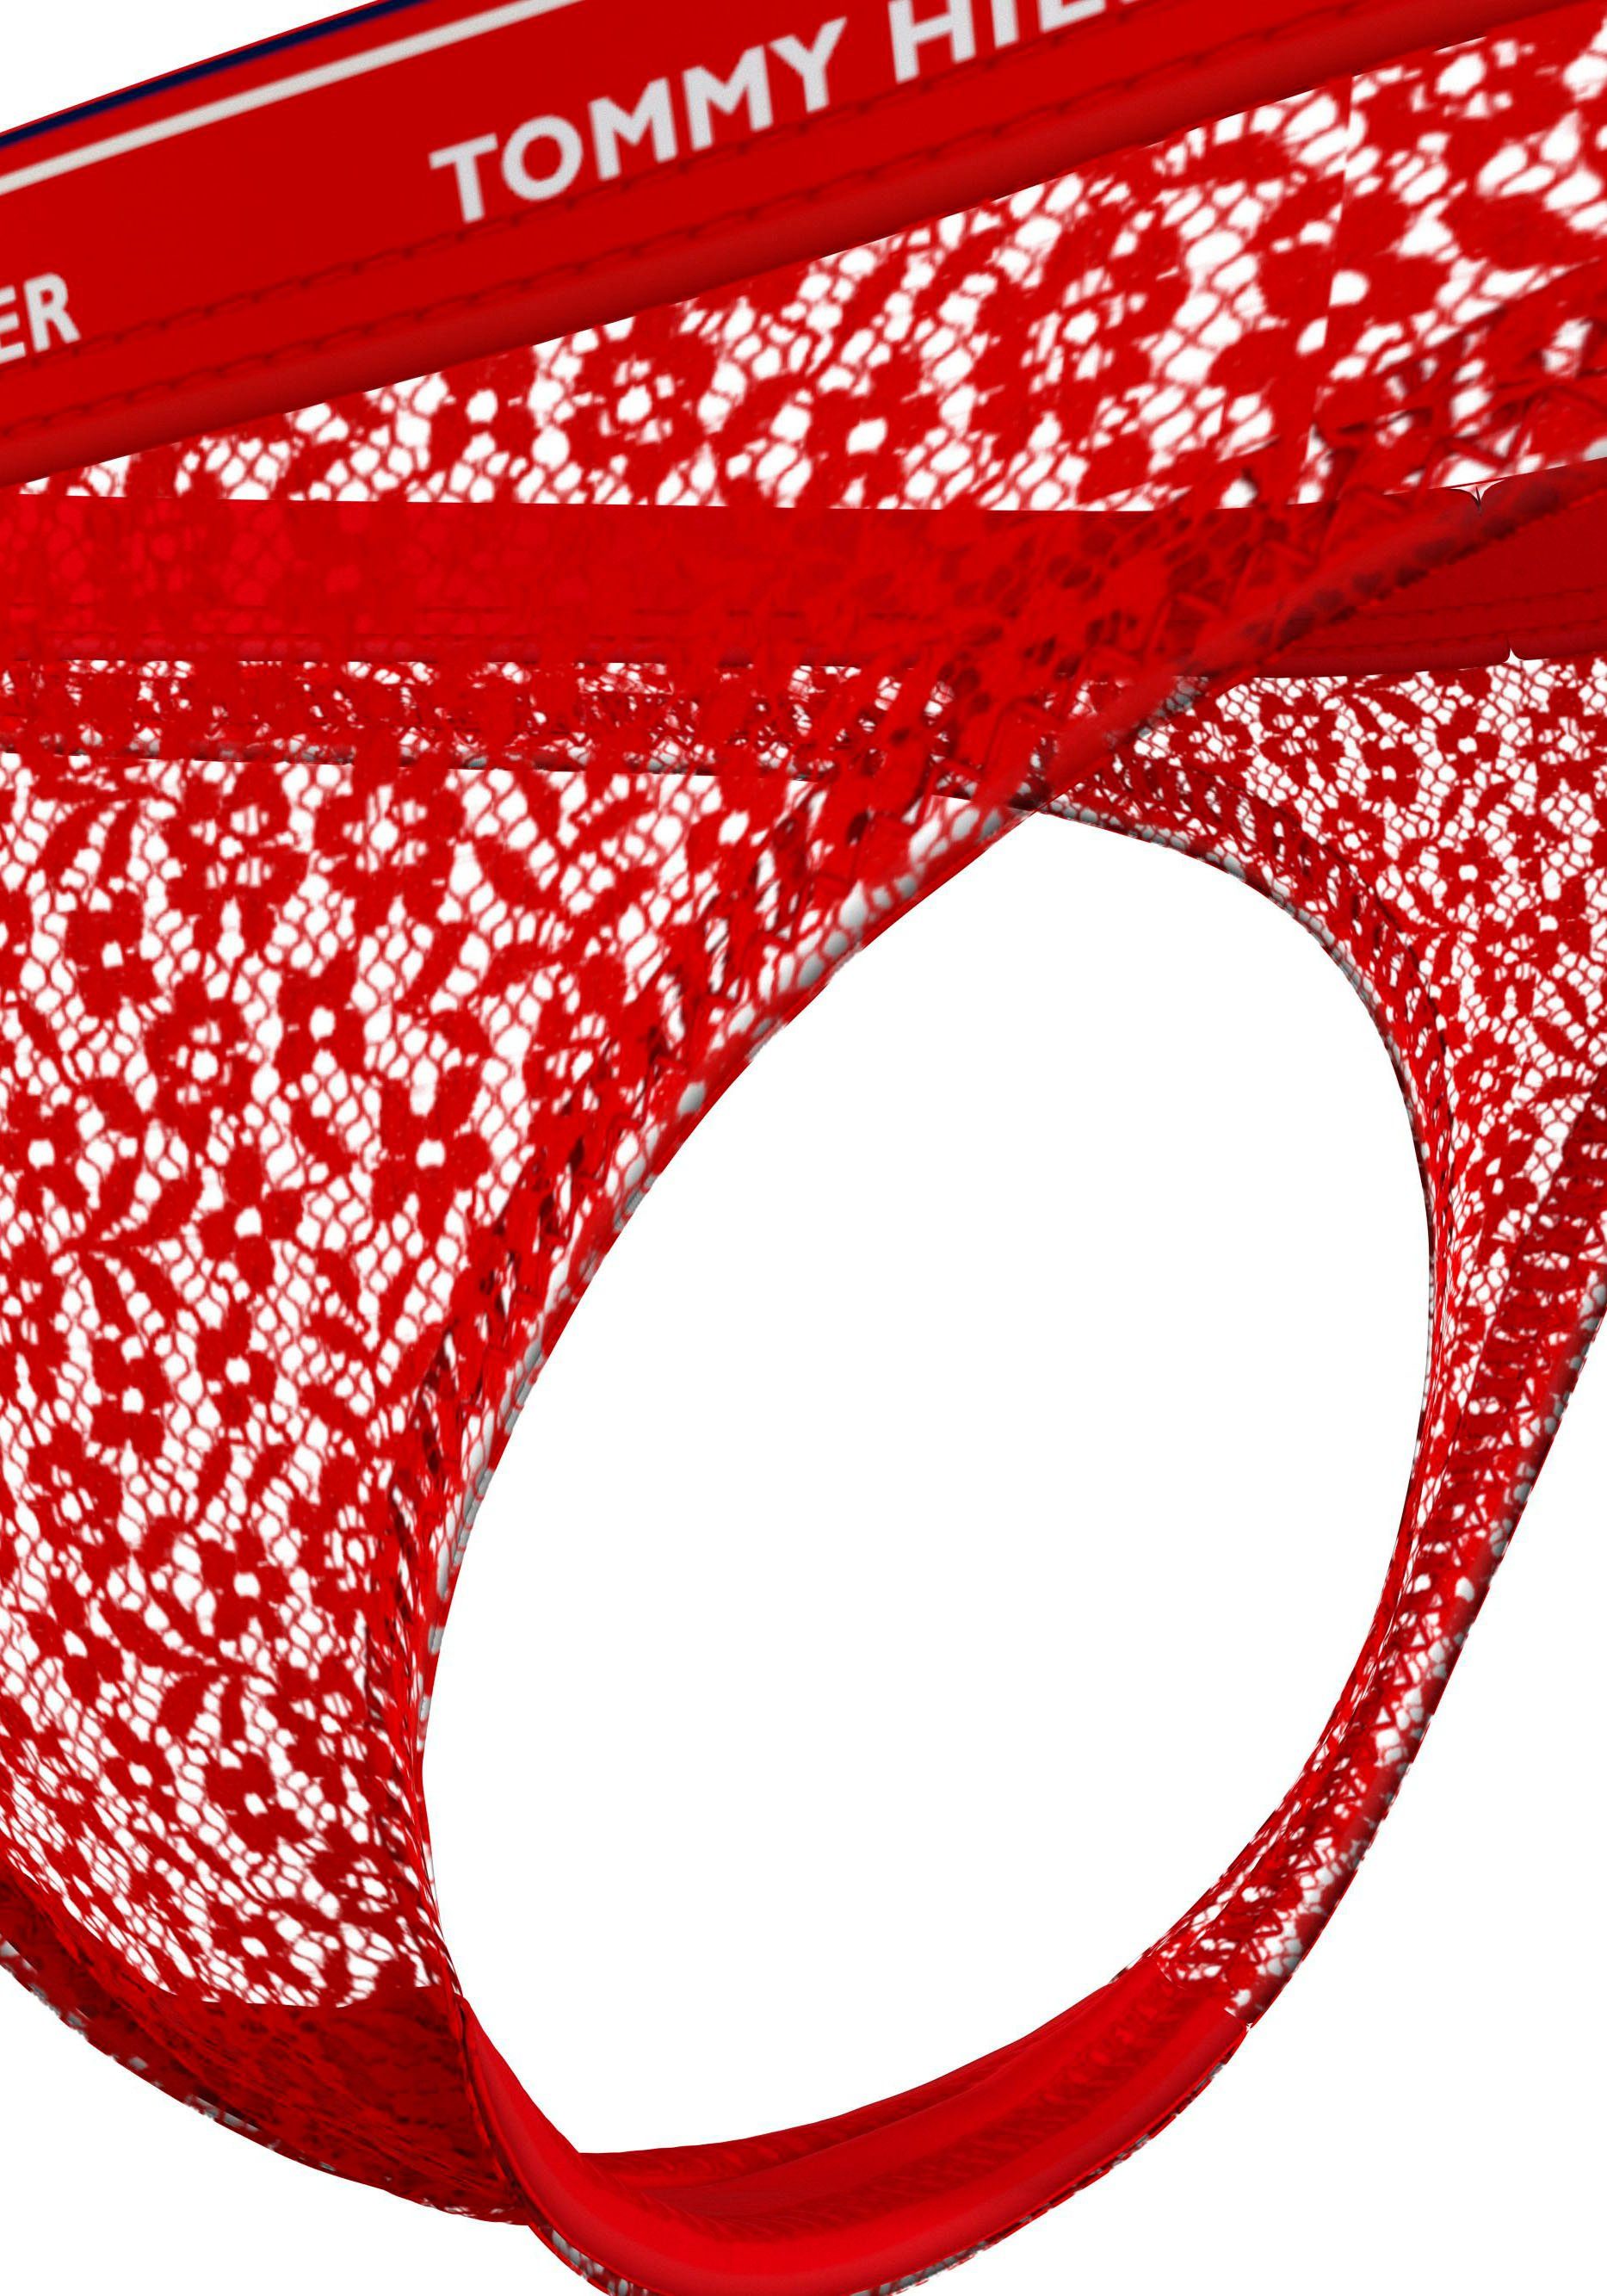 Tommy Hilfiger Underwear T-String THONG in modischem 5 5-St., PACK GIFTING Labelfarben (Packung, Rouge/Ultra/Guava/Des_Sky/Burg mit 5er-Pack) Logobund